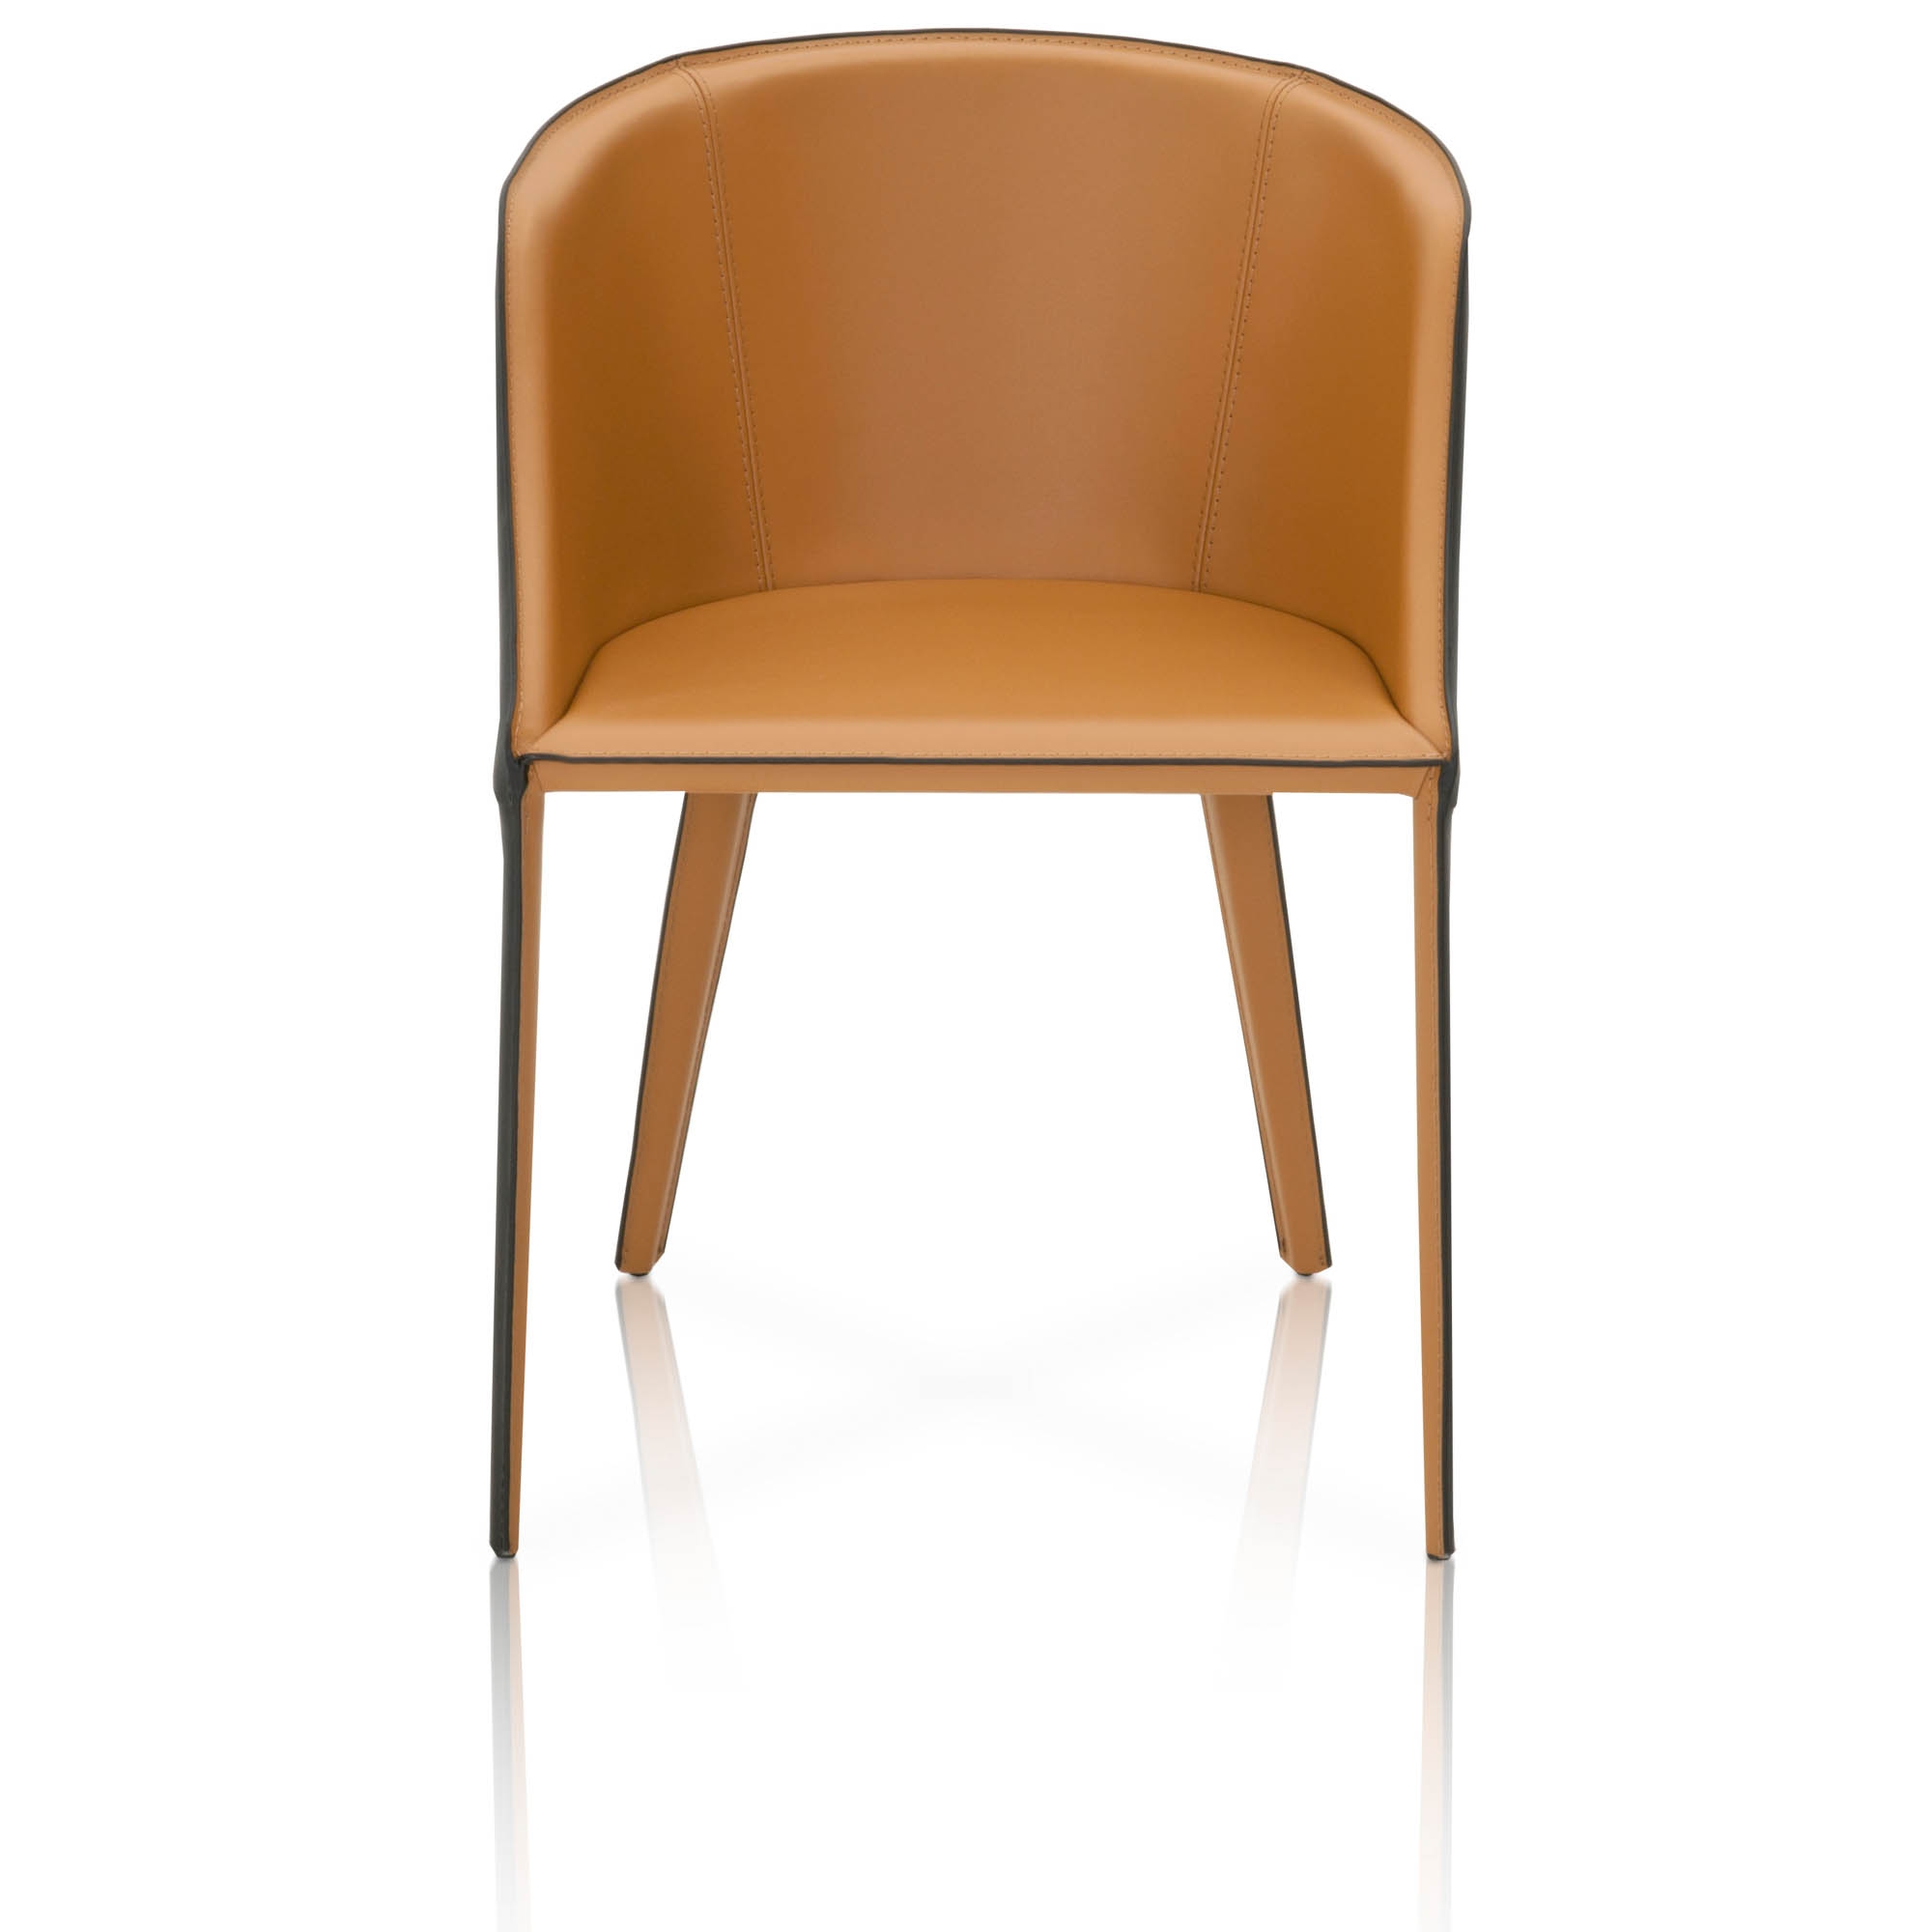 Fontana Dining Chair, Saddle Bonded Leather - Image 1